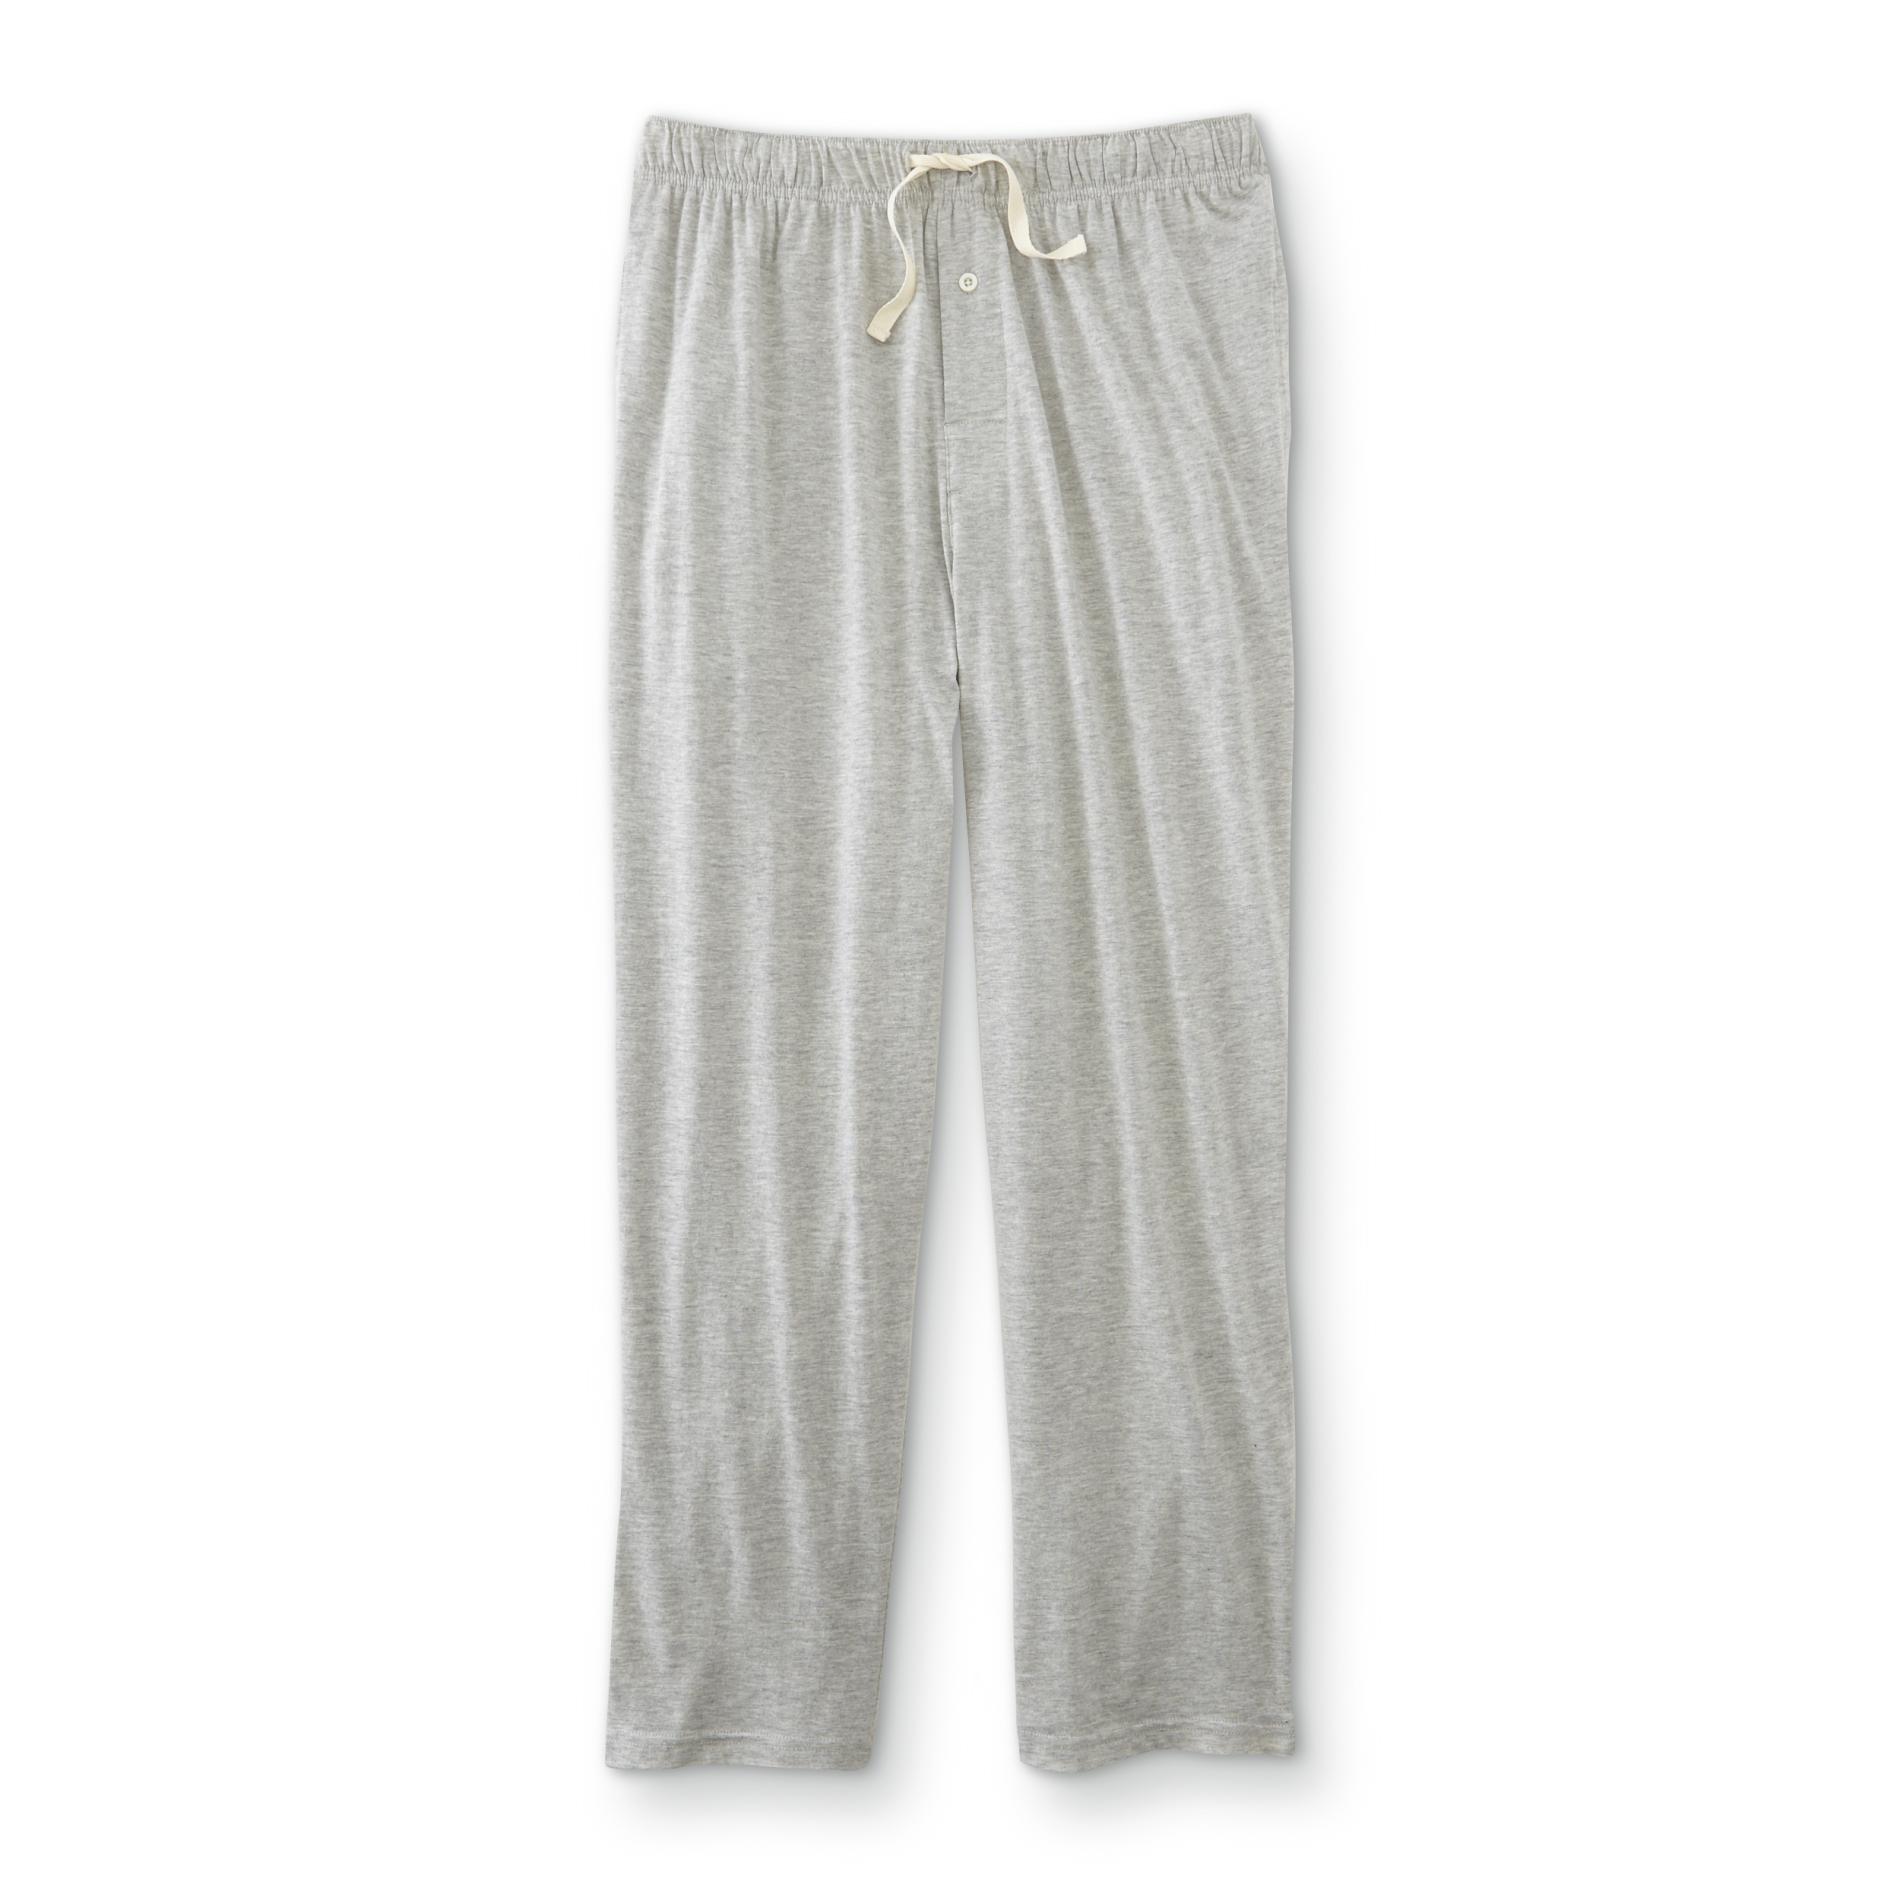 Simply Styled Men's Pajama Pants - Heathered